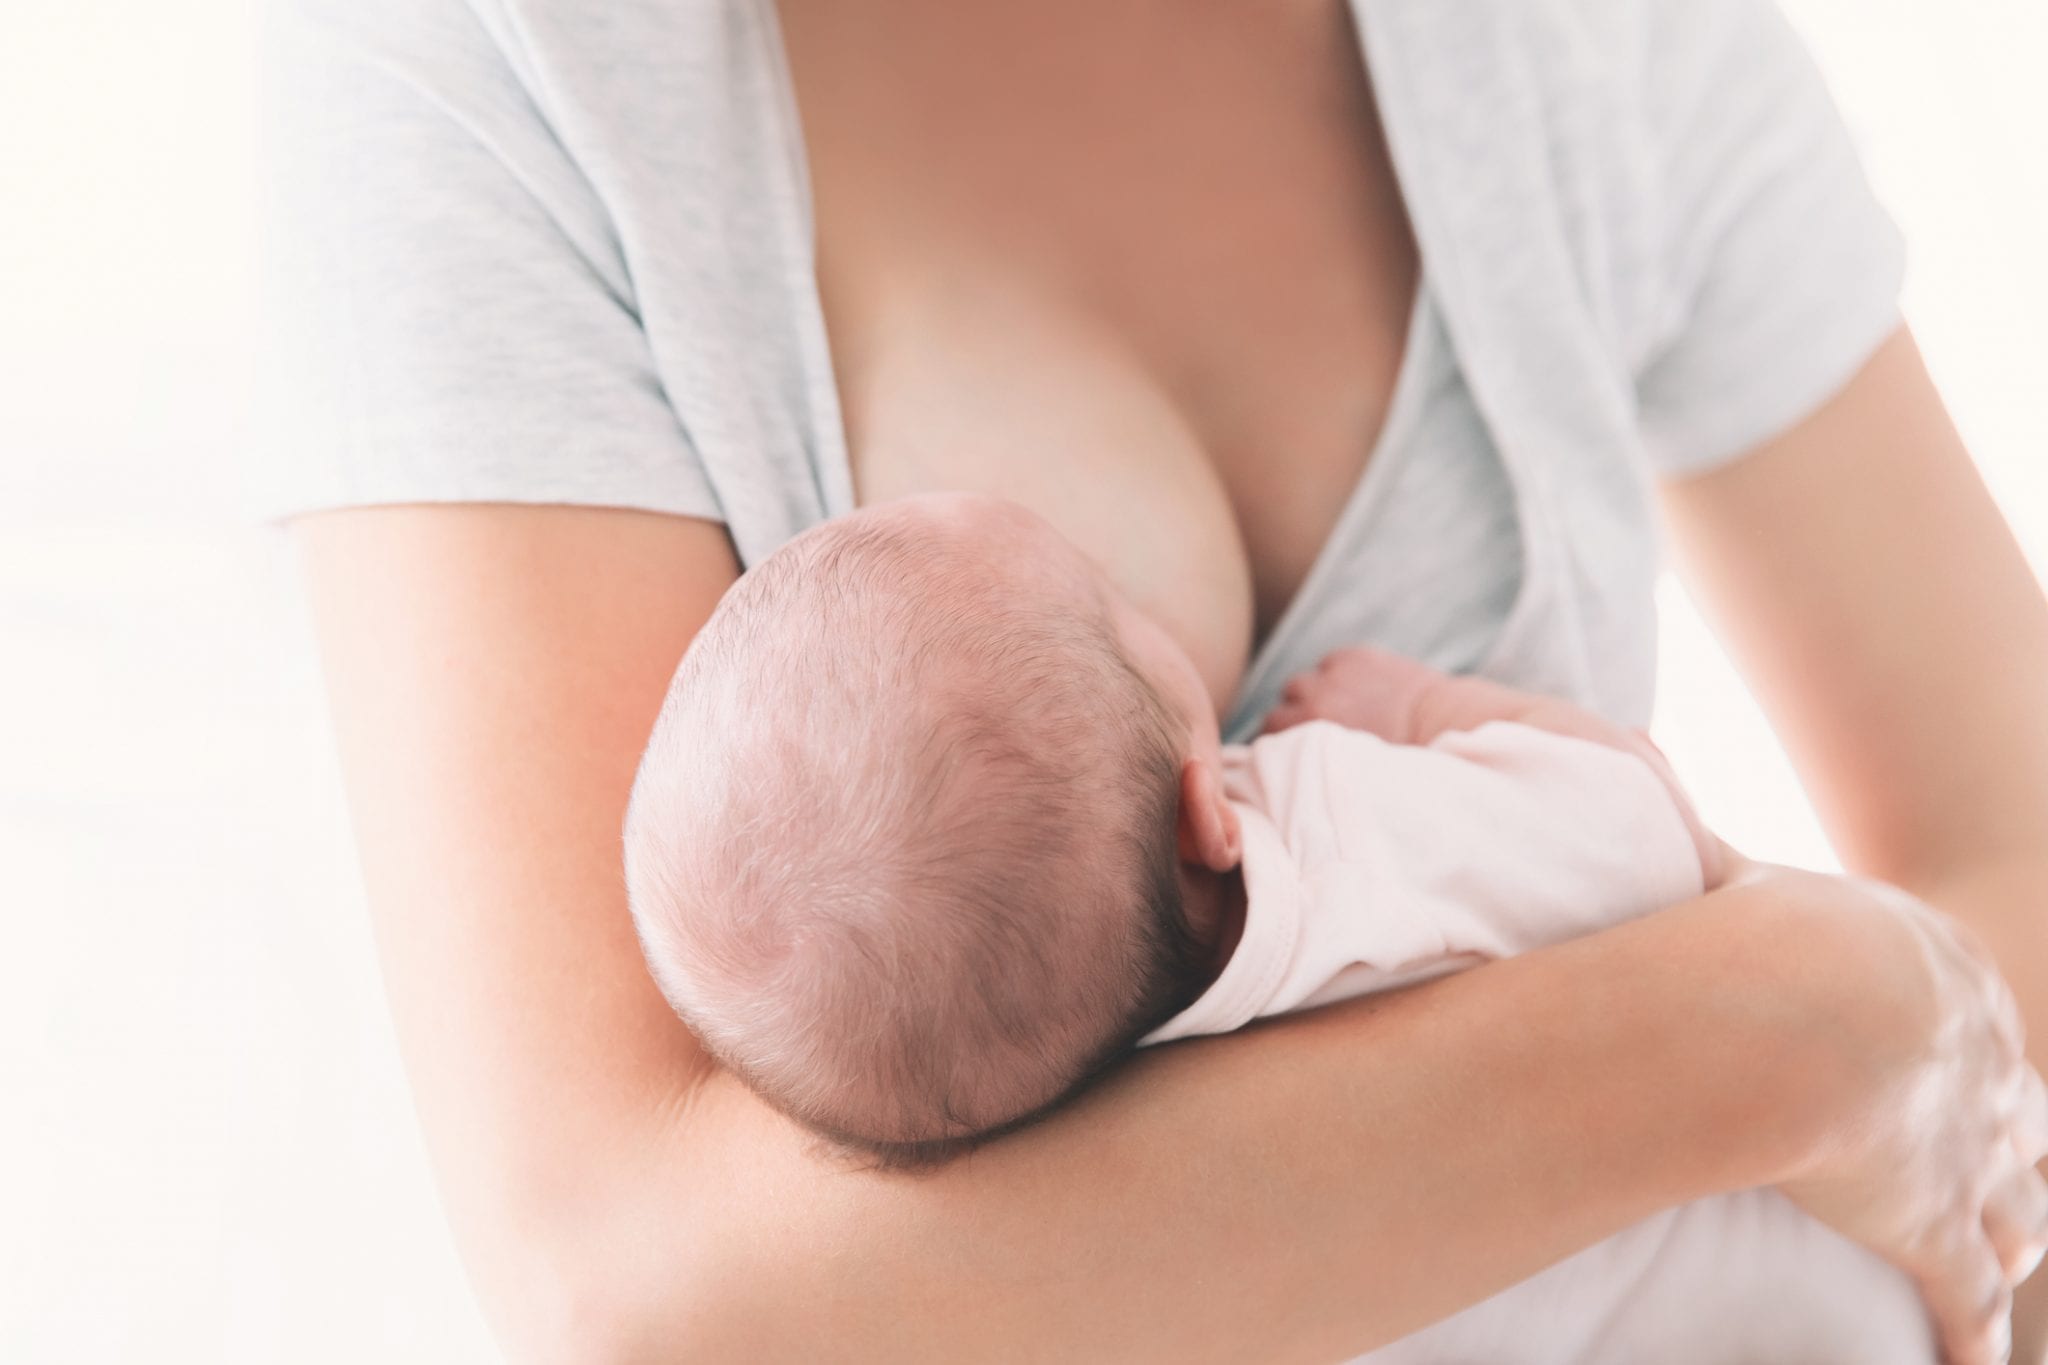 Woman breastfeeding her baby